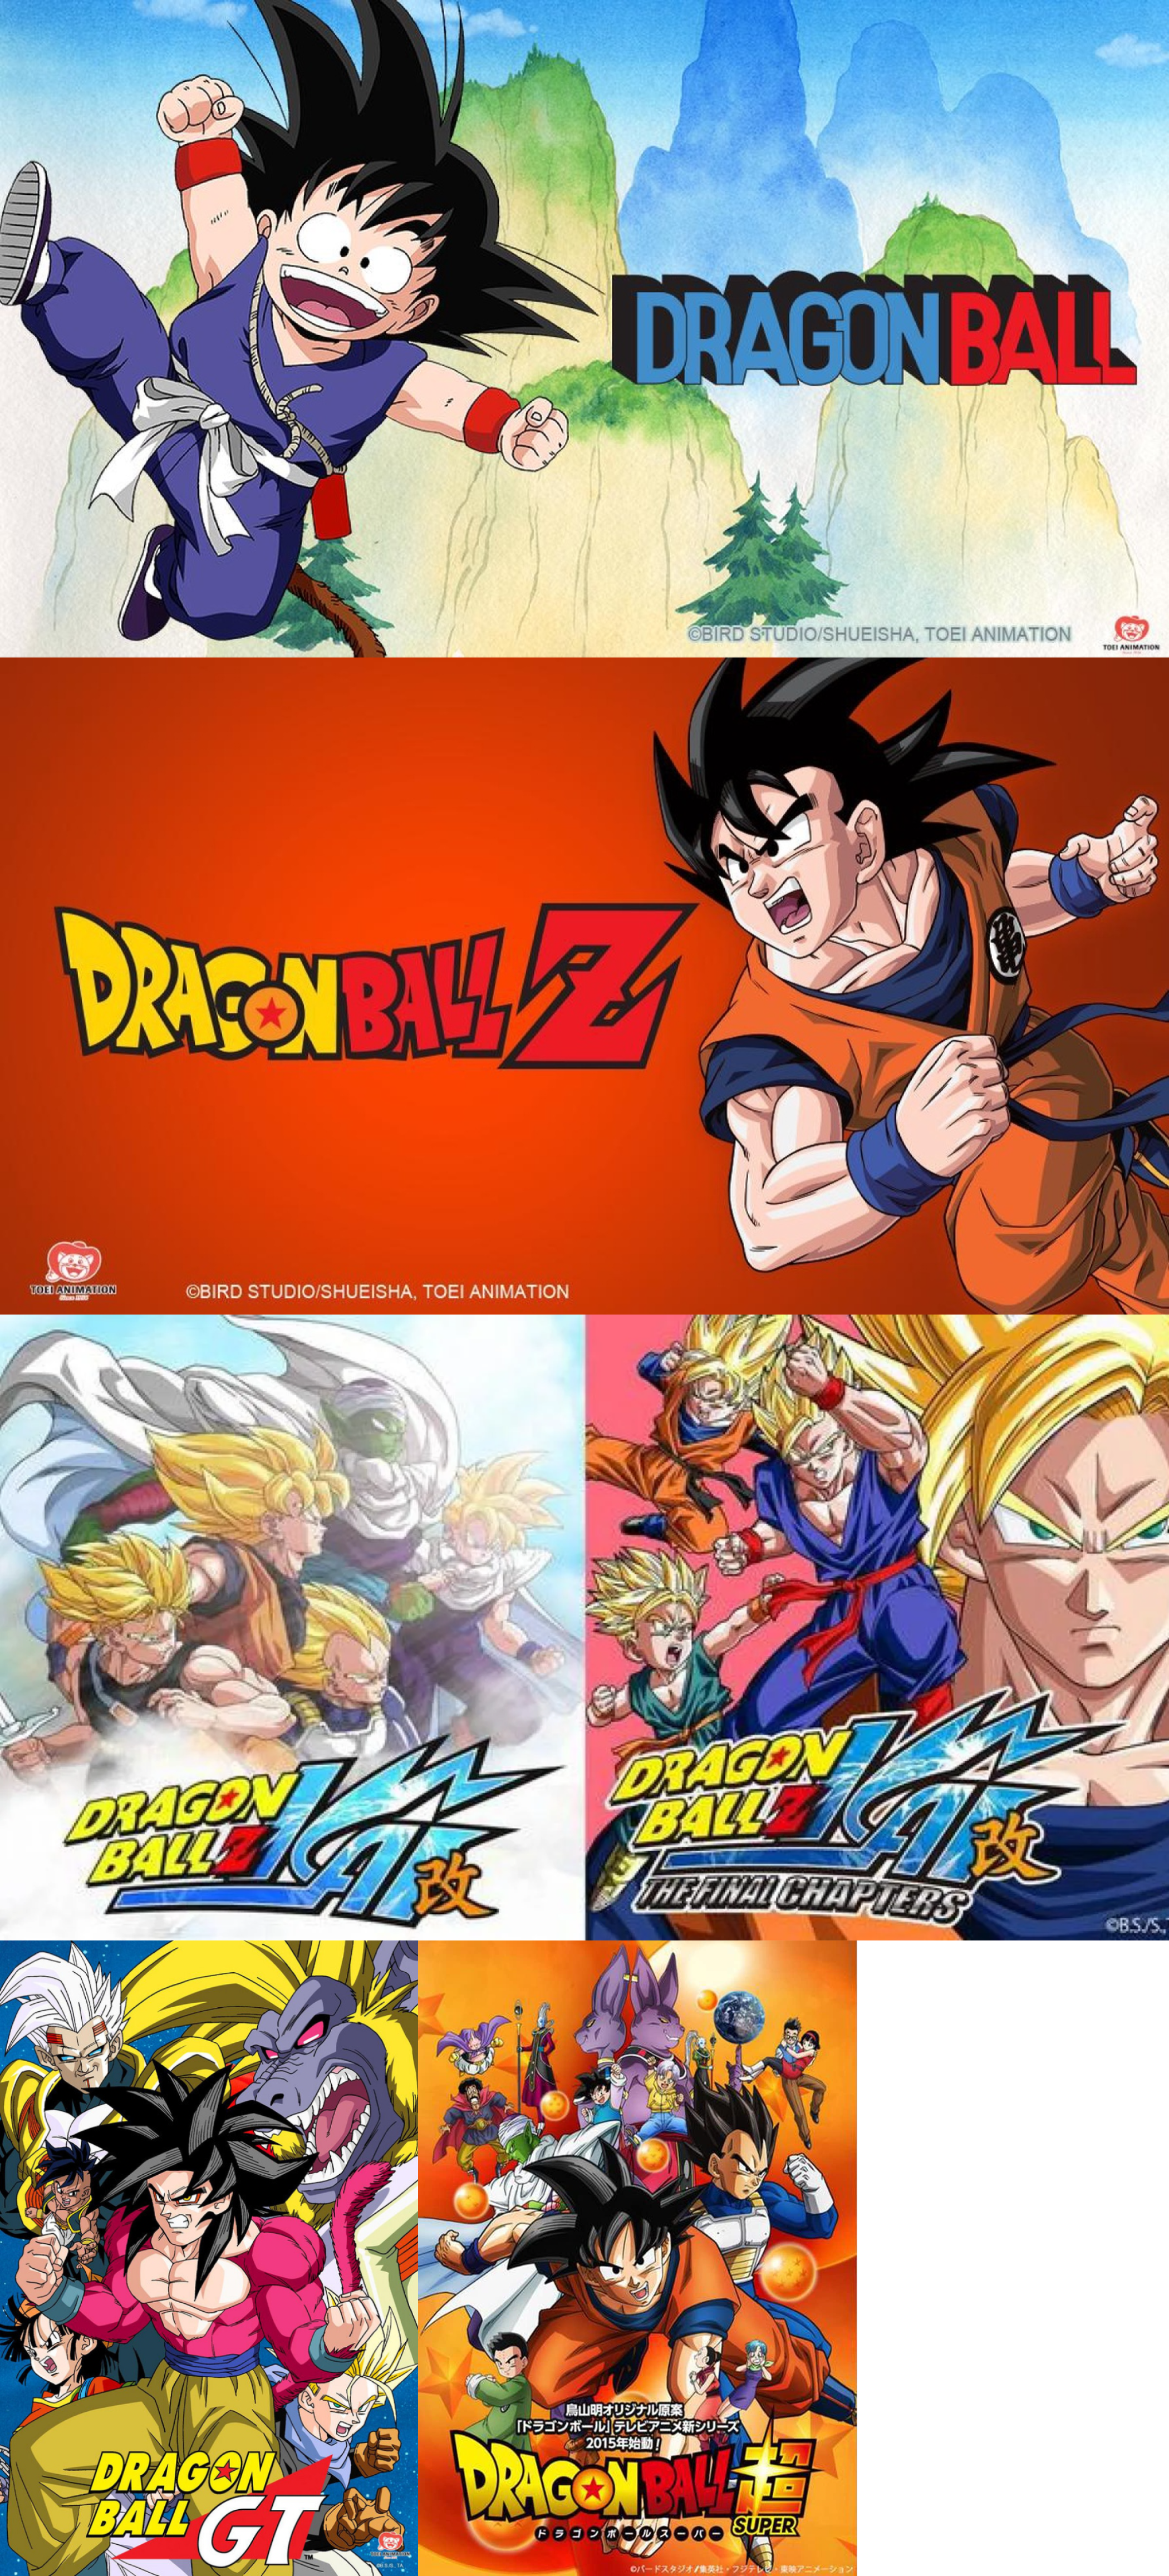 Dragon Ball Z - Majin Buu Arc by KinyoboTV on DeviantArt